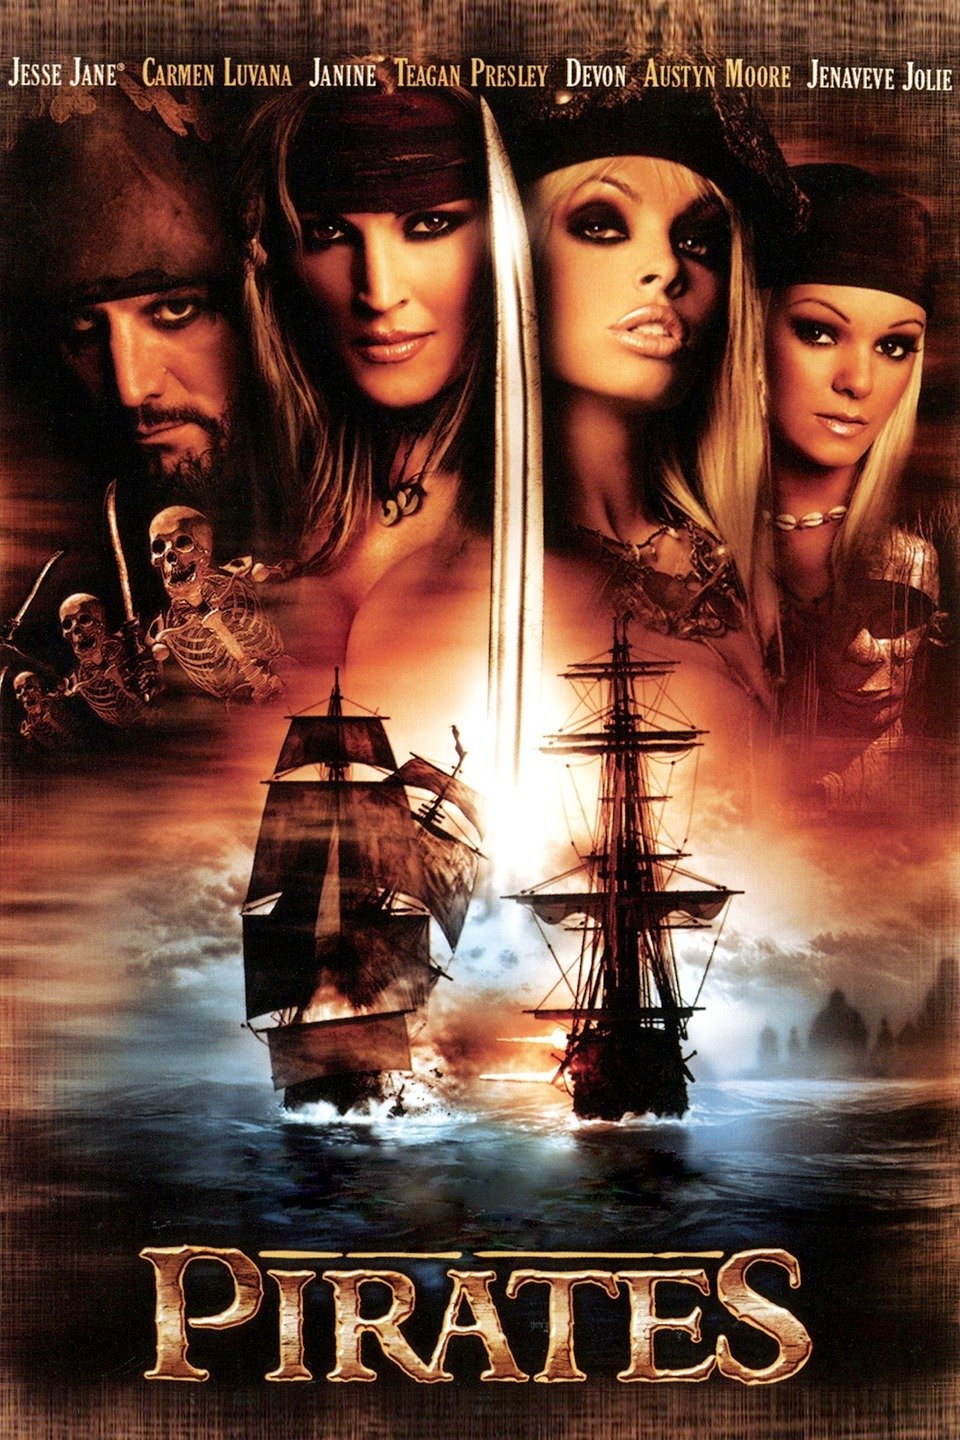 Pirates (2005) MP4 Movie (18+)